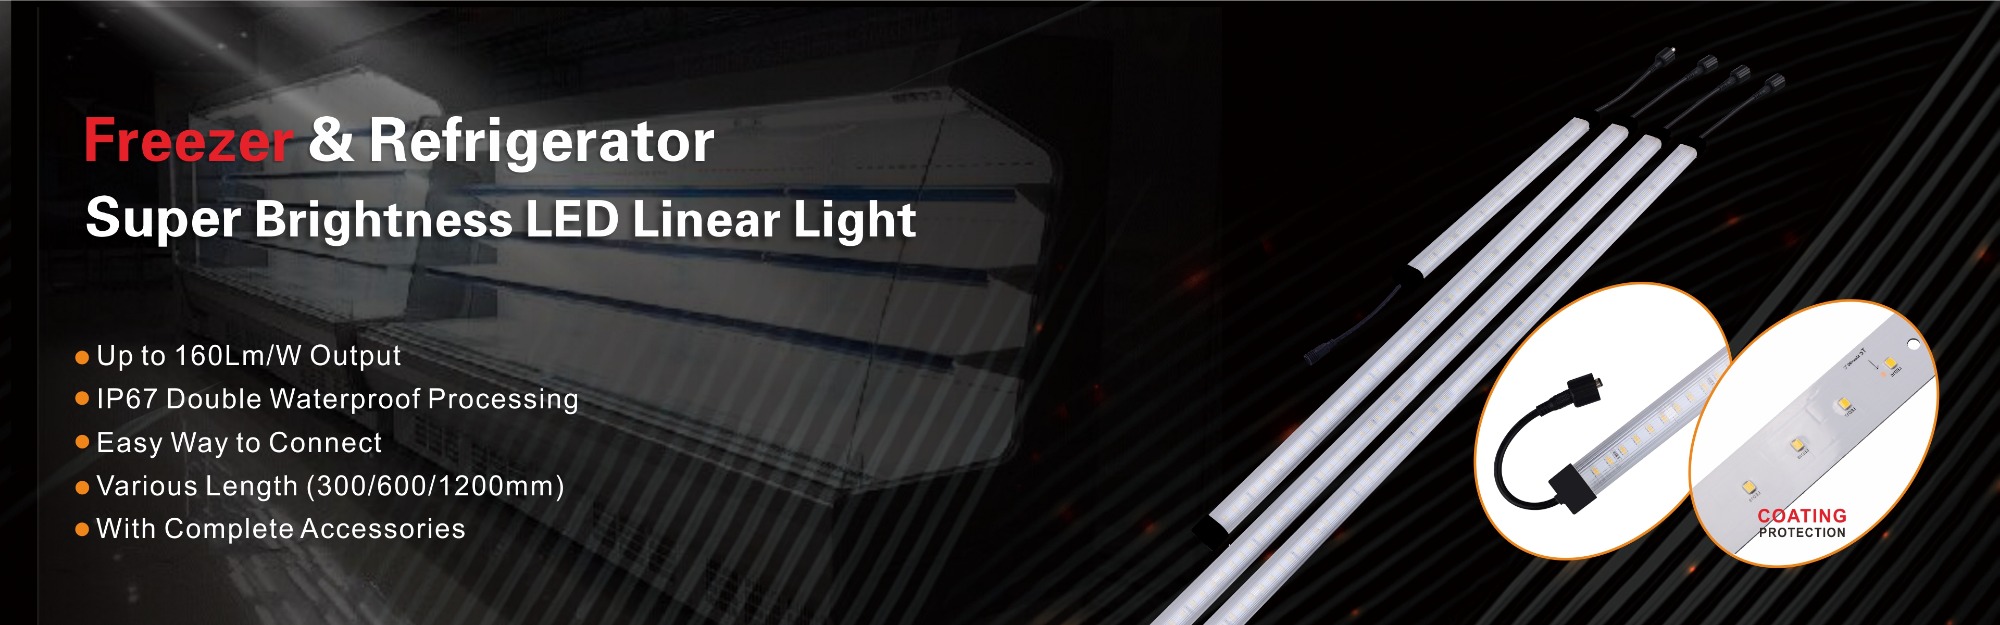 NEW Freezer &amp; Refrigerator LED Linear Light